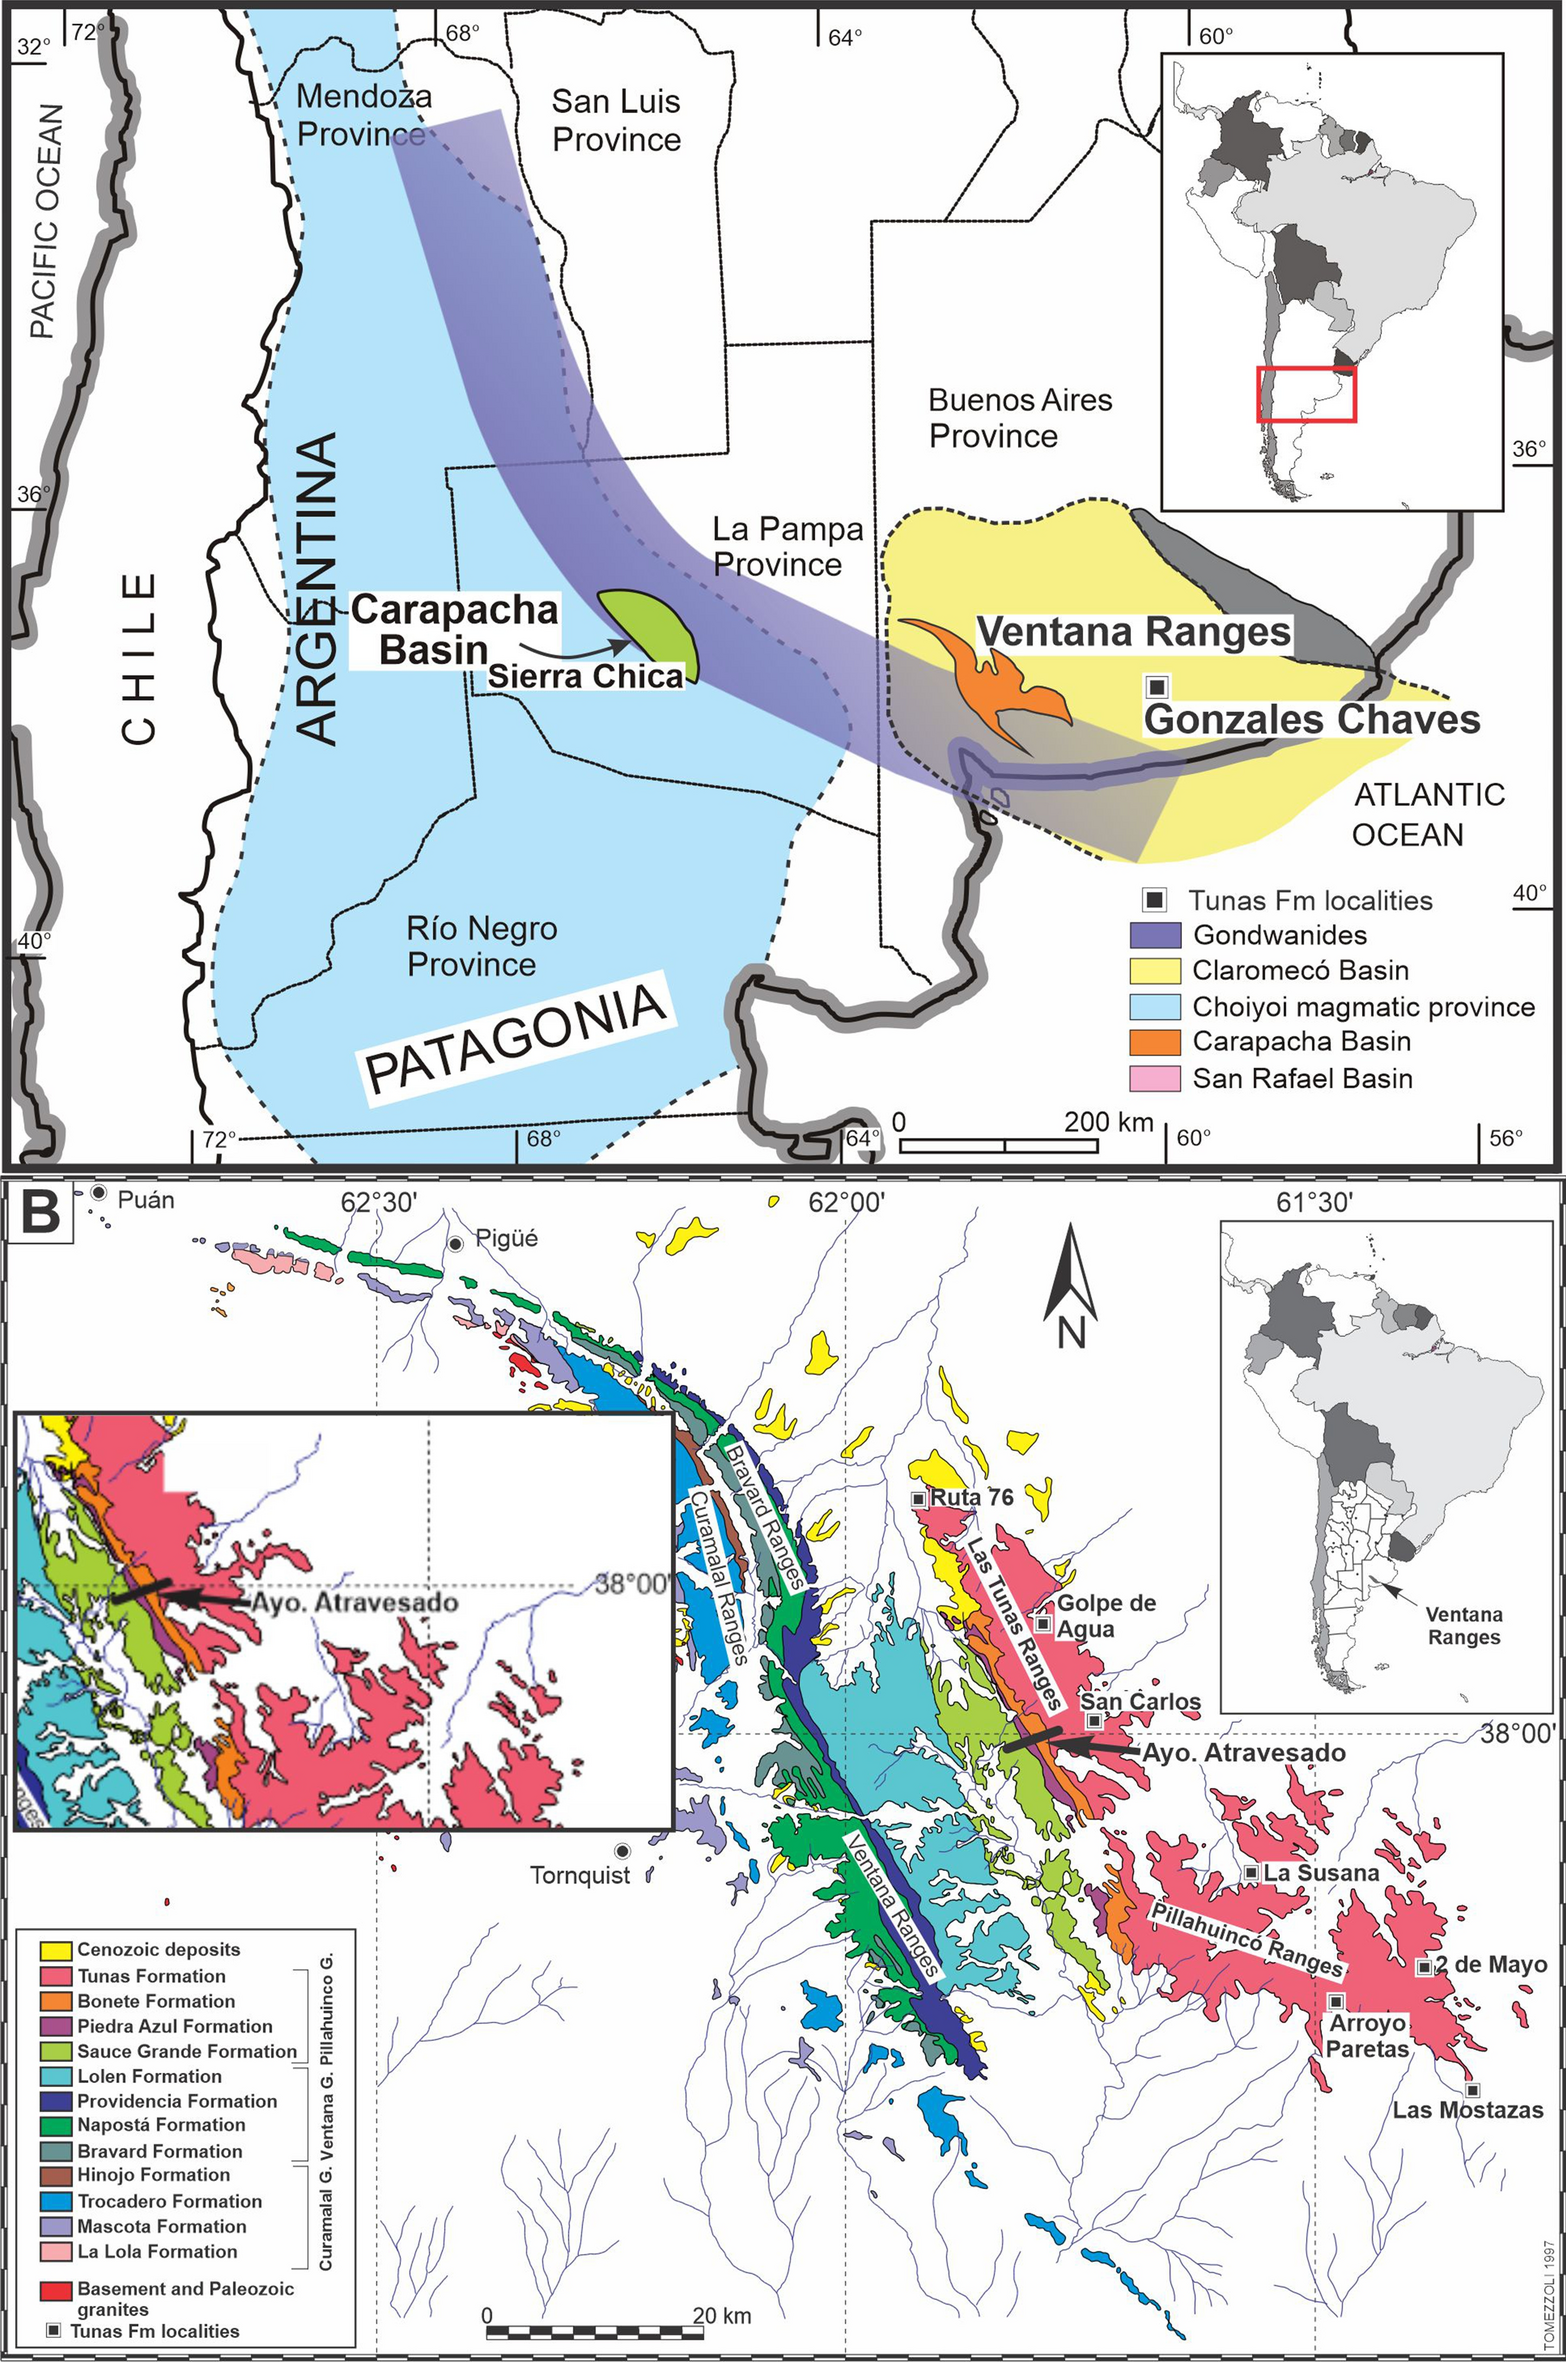 Deformation understanding in the Upper Paleozoic of Ventana Ranges